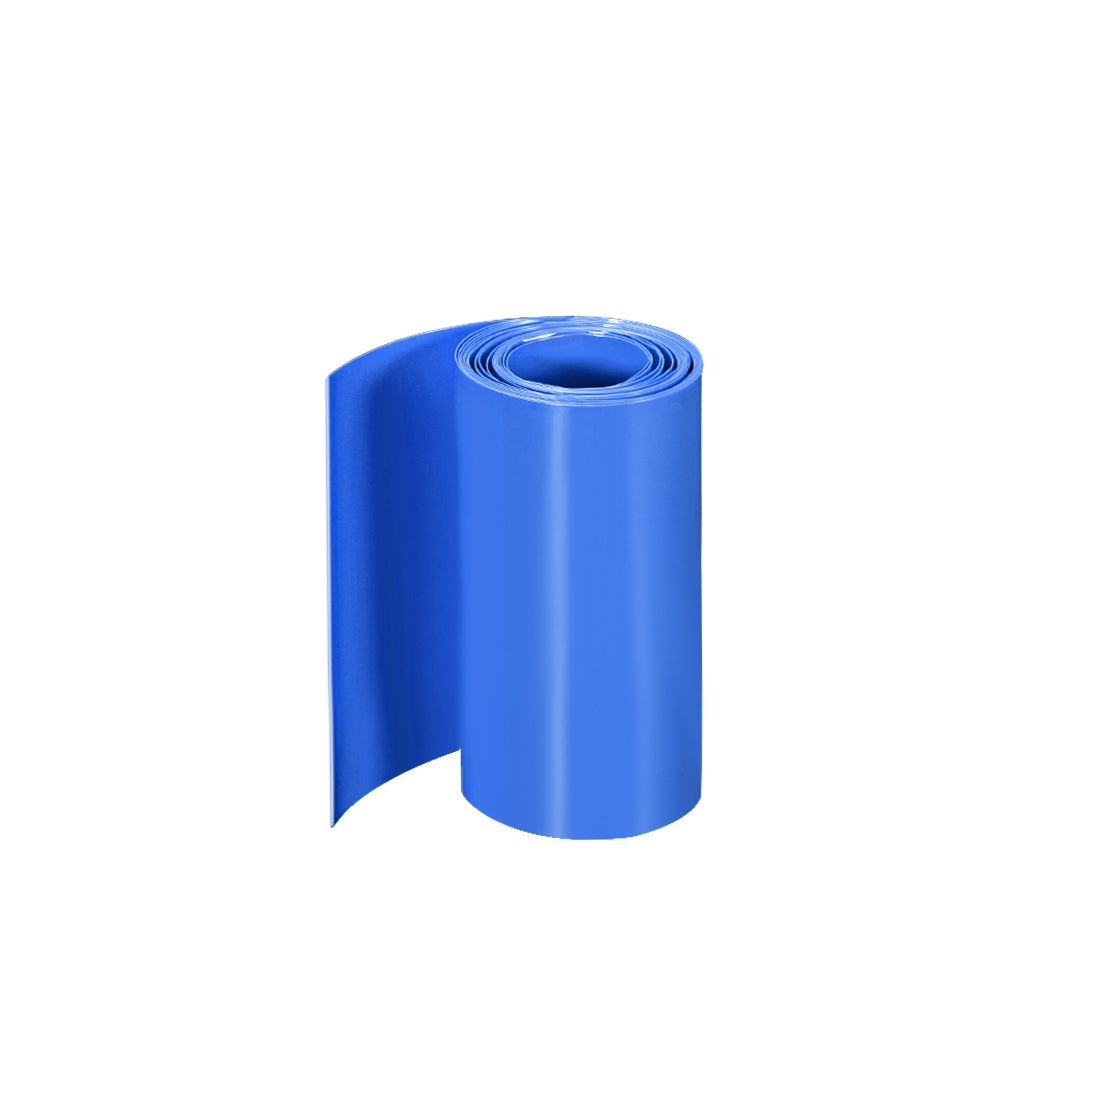 uxcell Uxcell PVC Heat Shrink Tube 80mm Flat Width Wrap